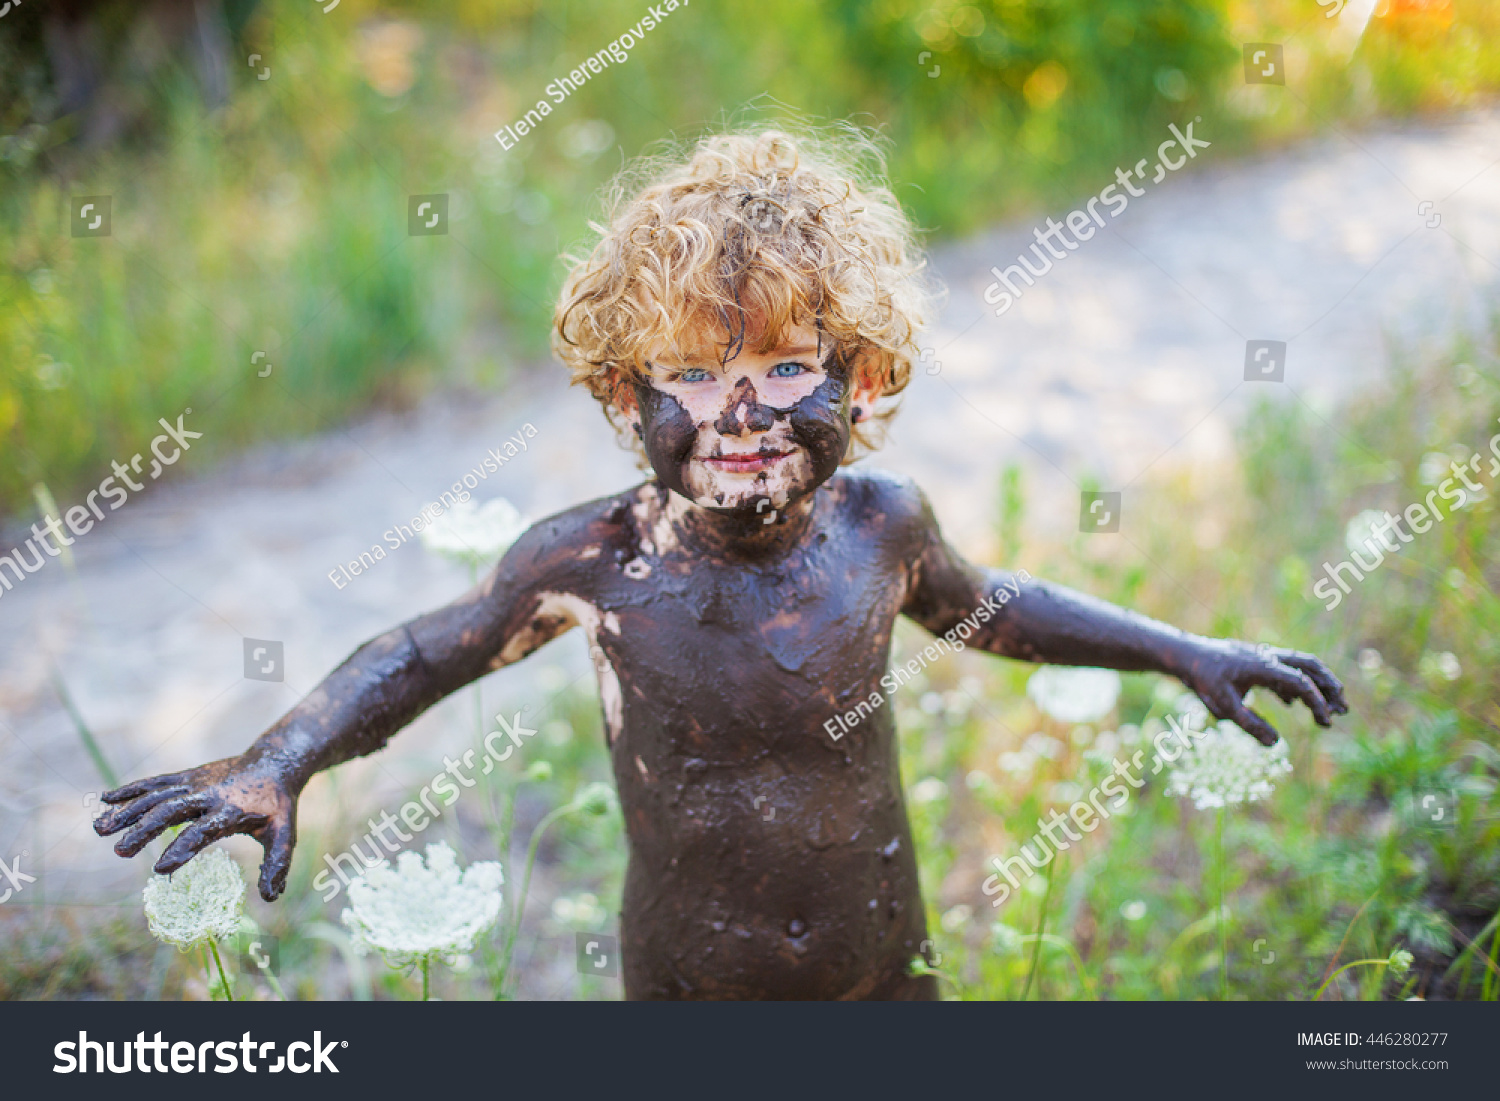 Naked Boy Mud Foto Stok 446280277 Shutterstock 5214